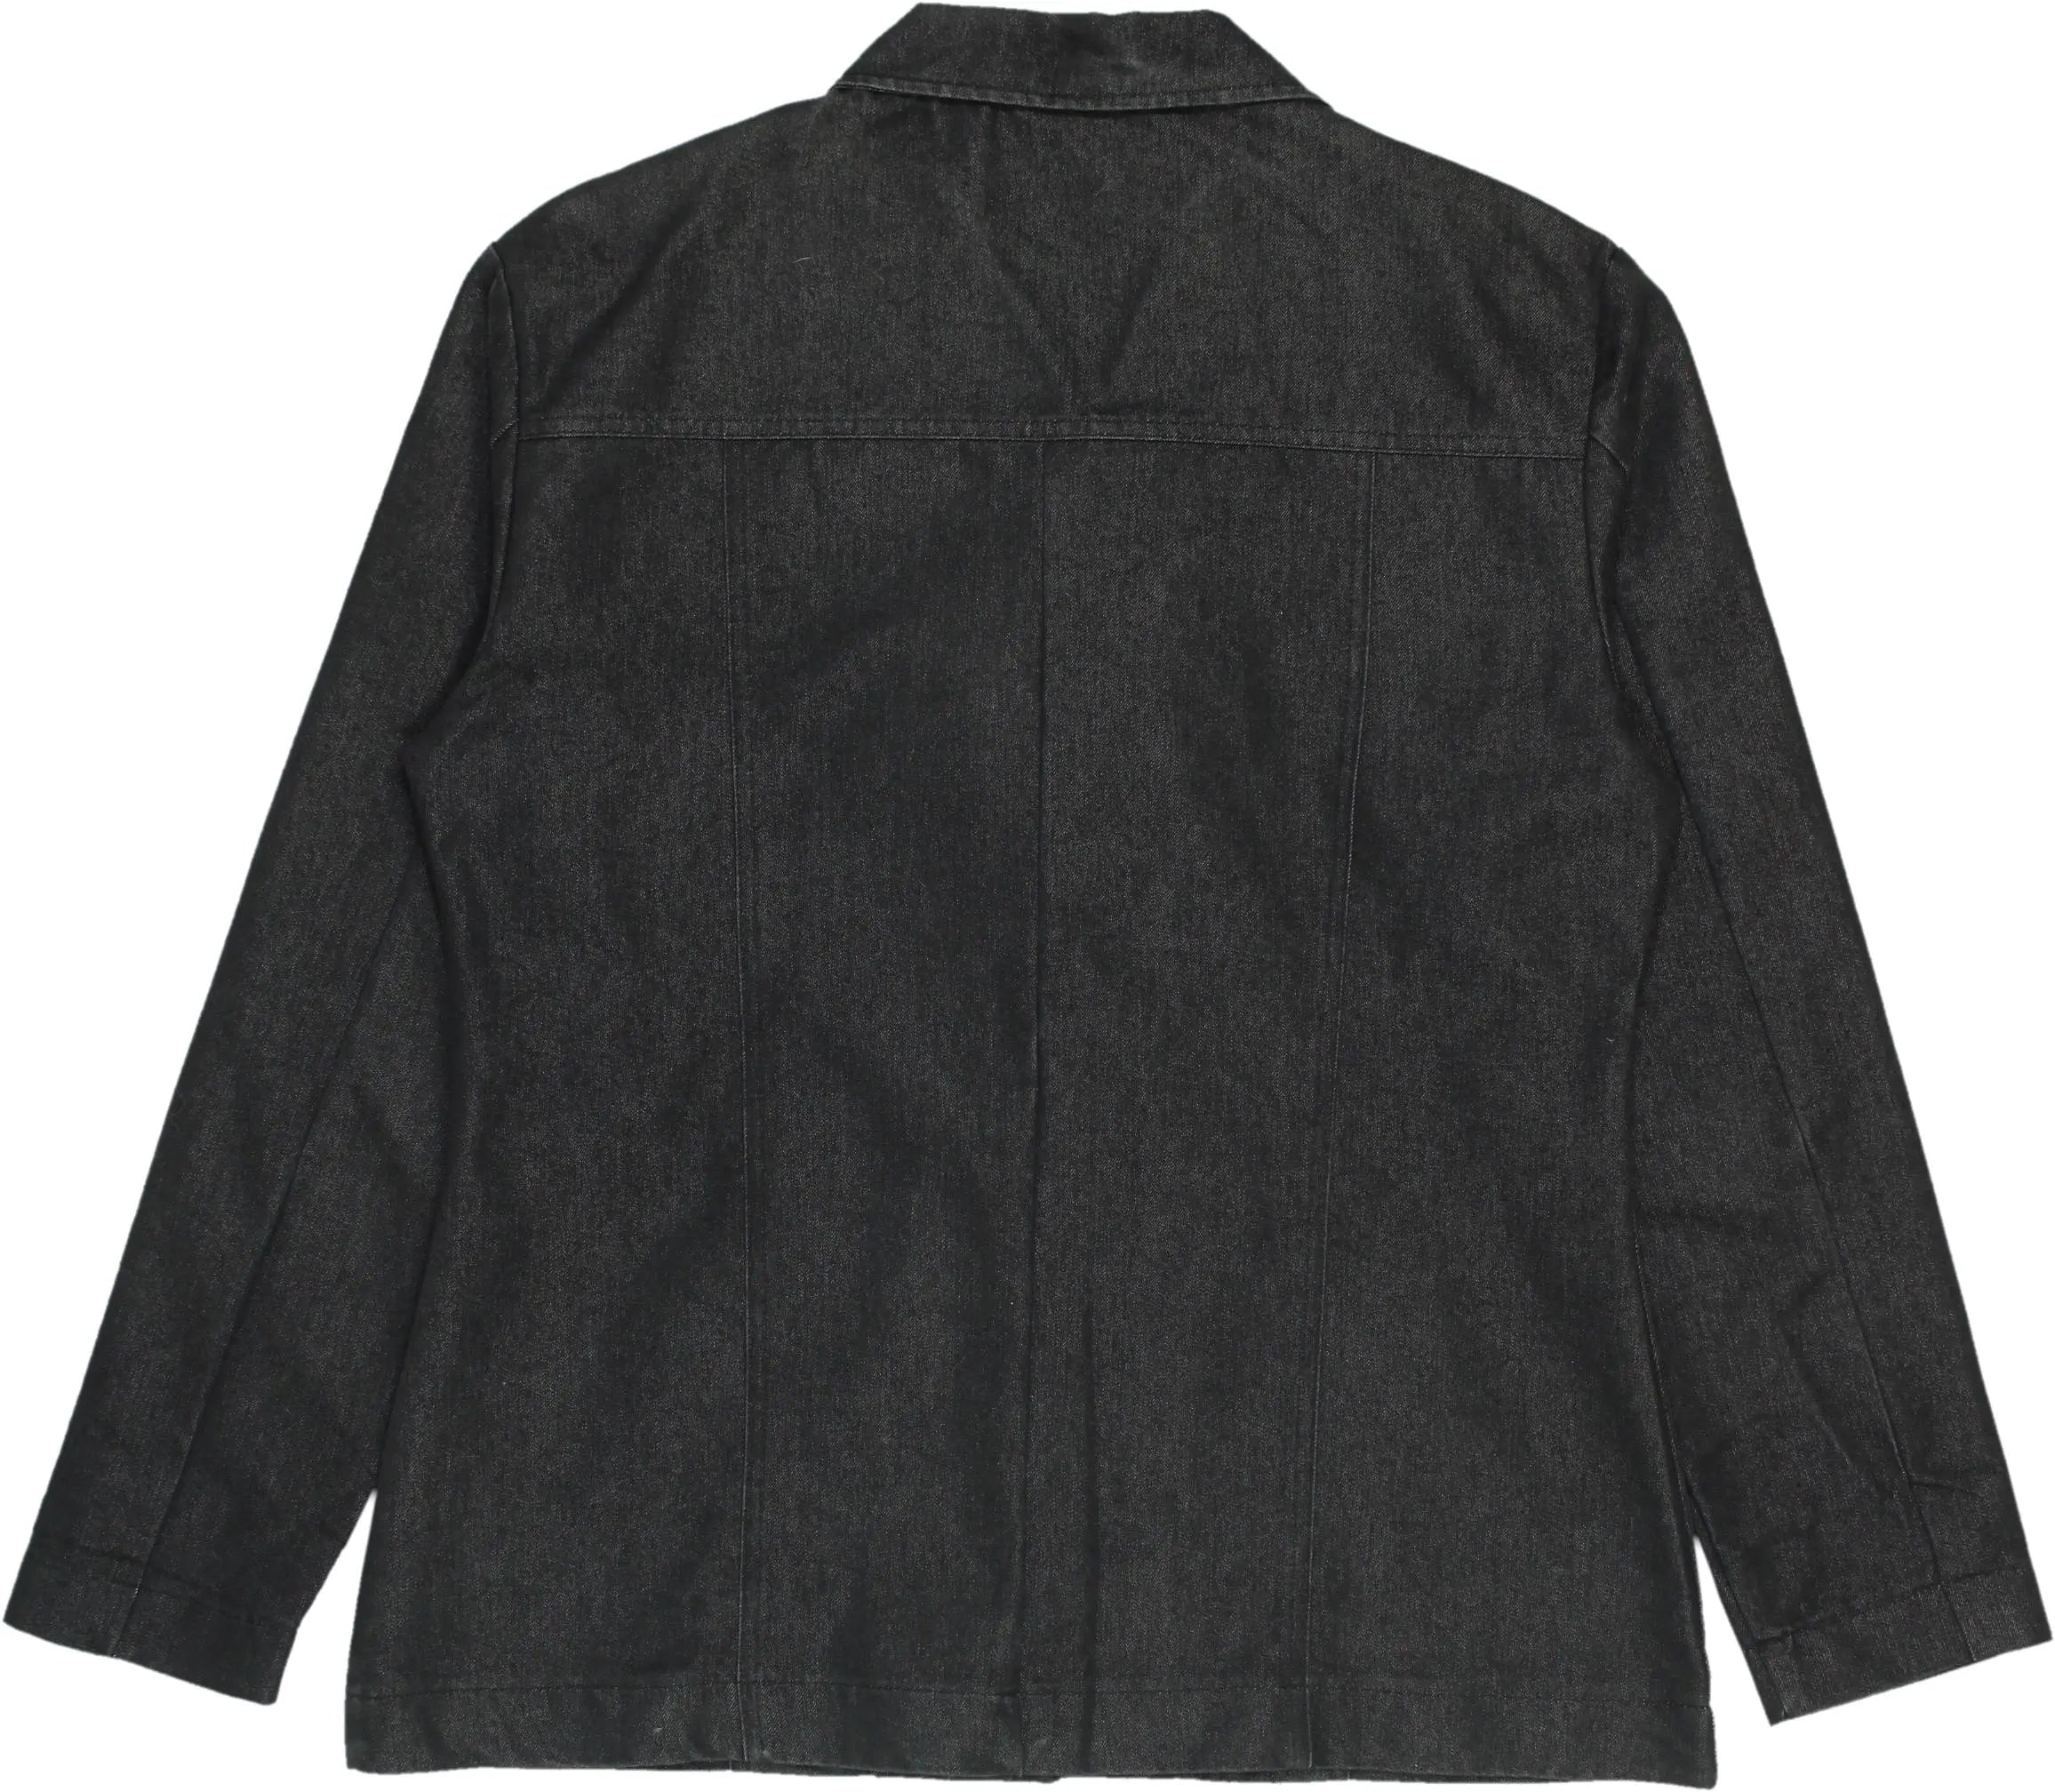 Yest - Denim Jacket- ThriftTale.com - Vintage and second handclothing